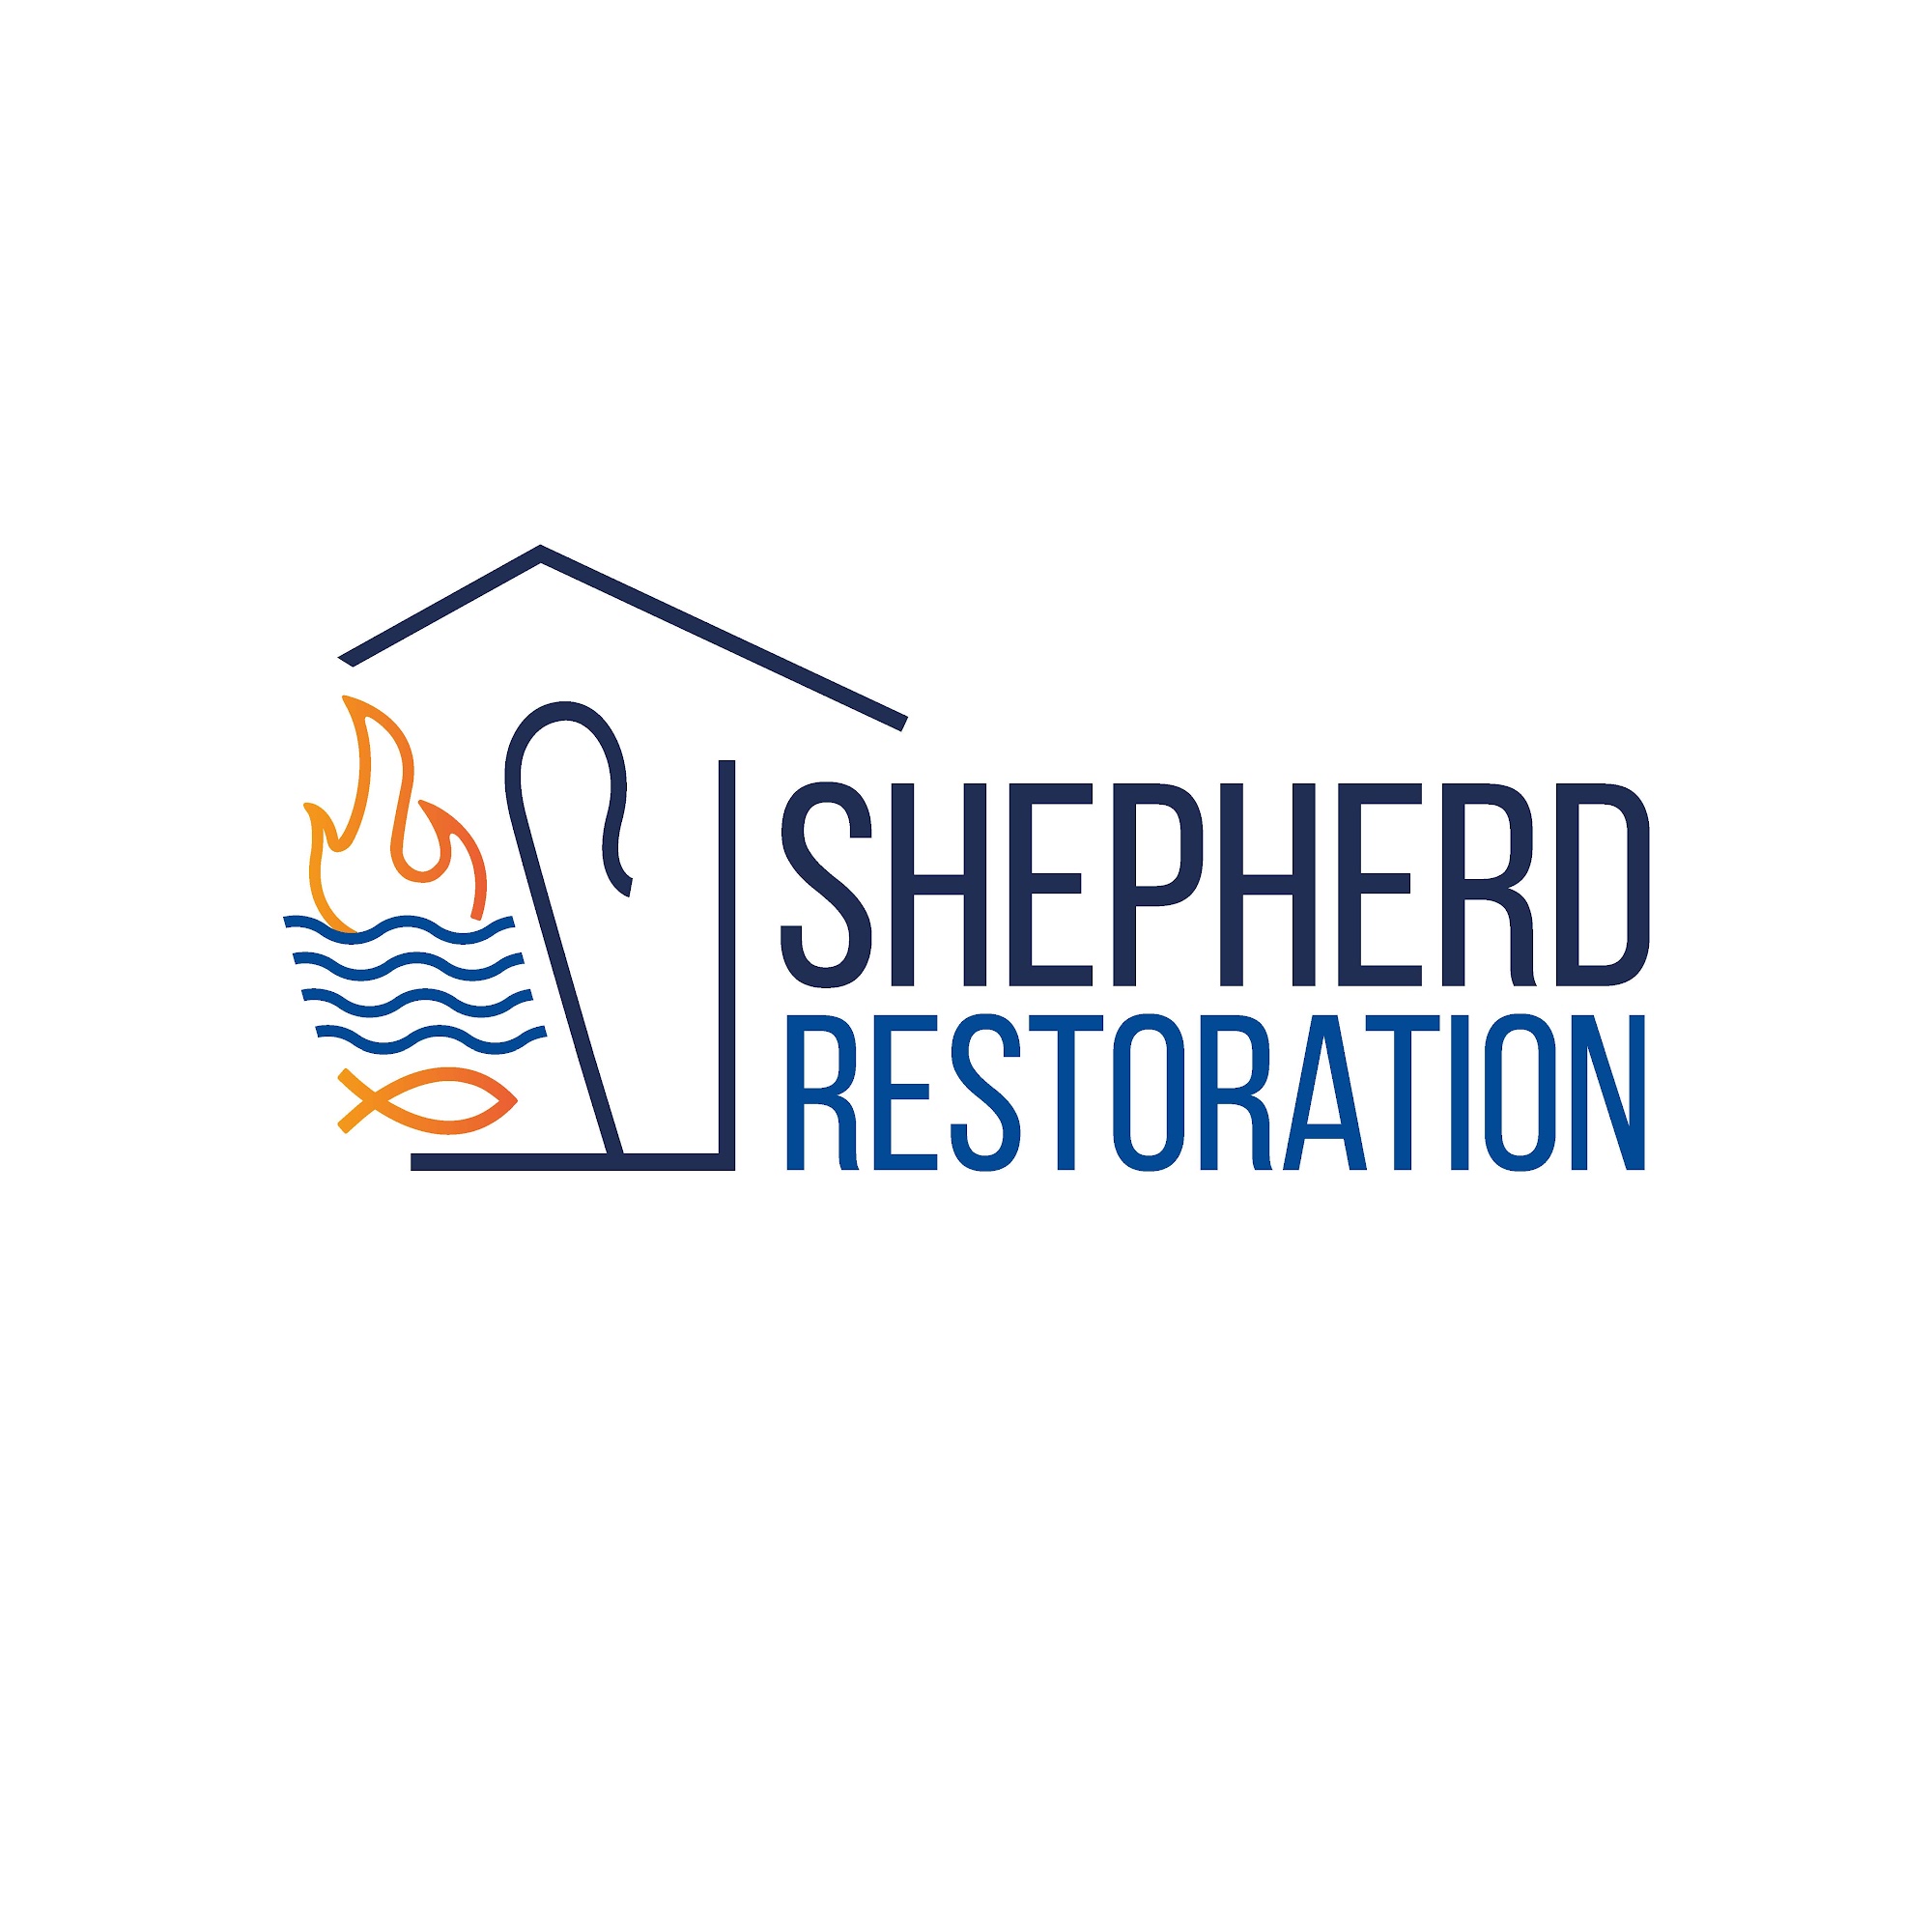 Shepherd Restoration